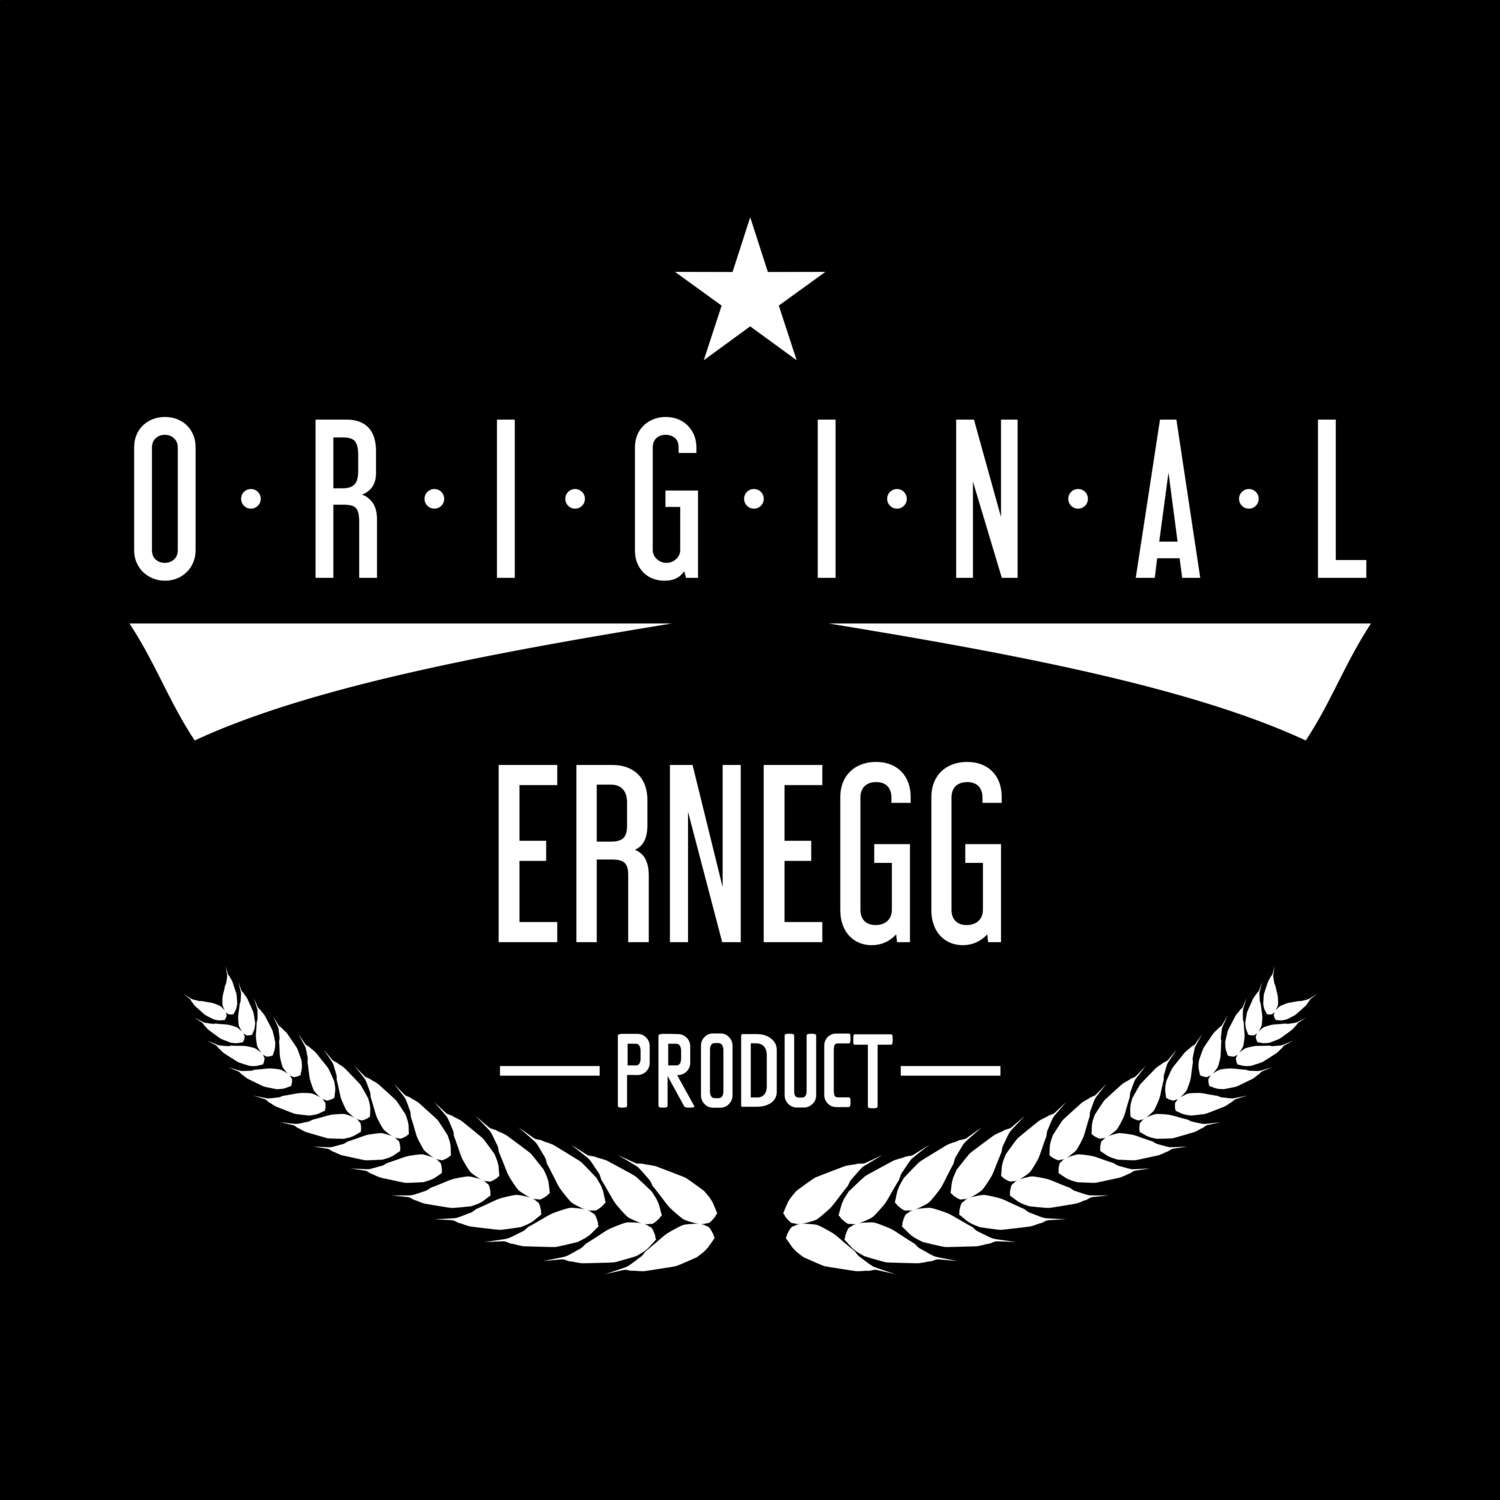 Ernegg T-Shirt »Original Product«